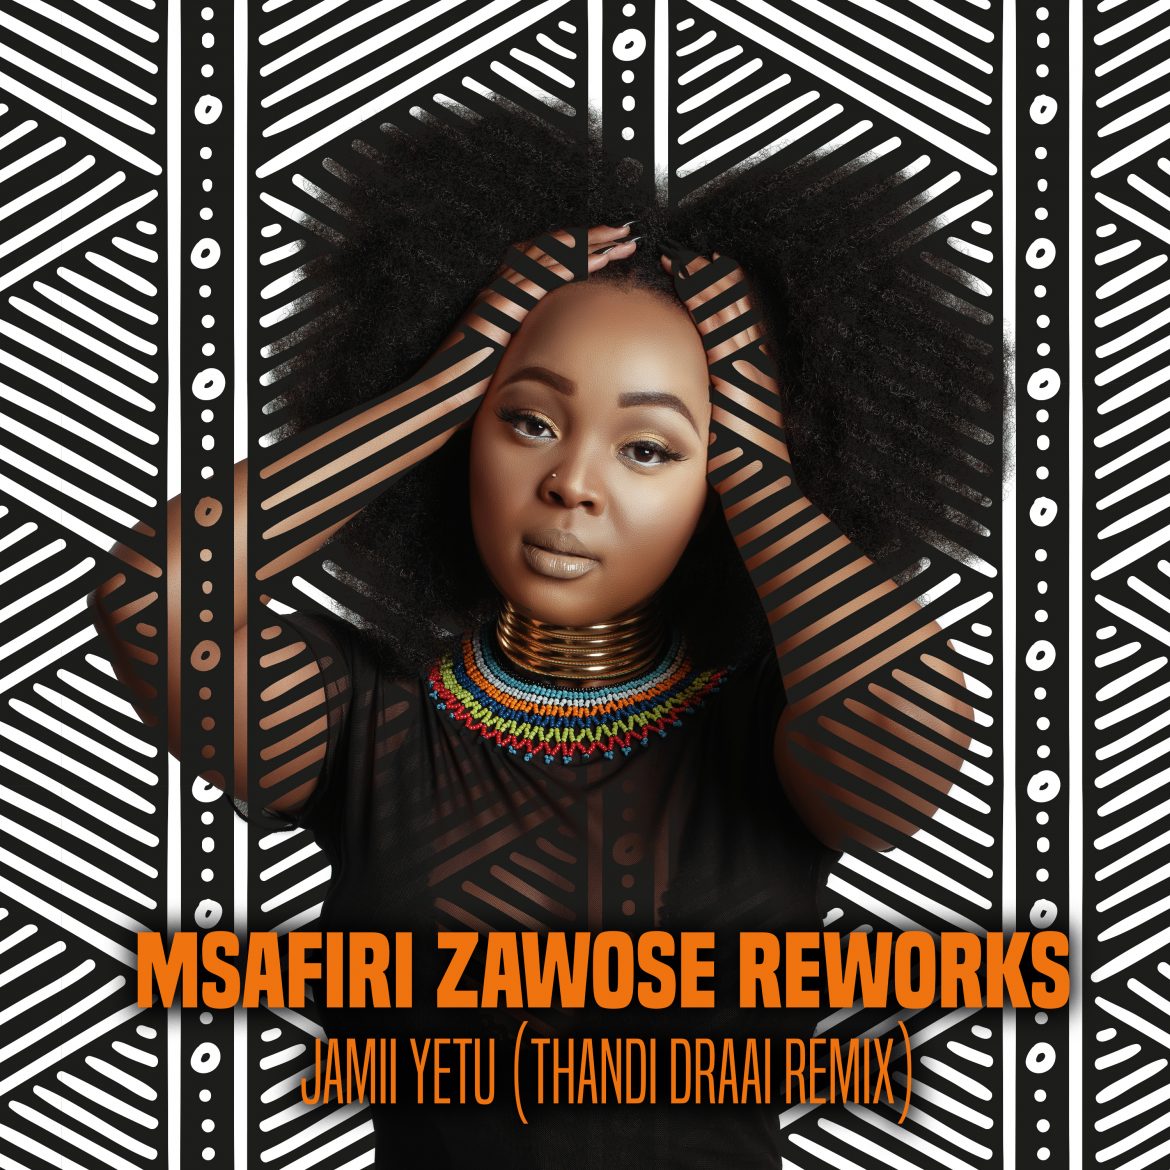 Jamii Yetu Thandi Draai remix